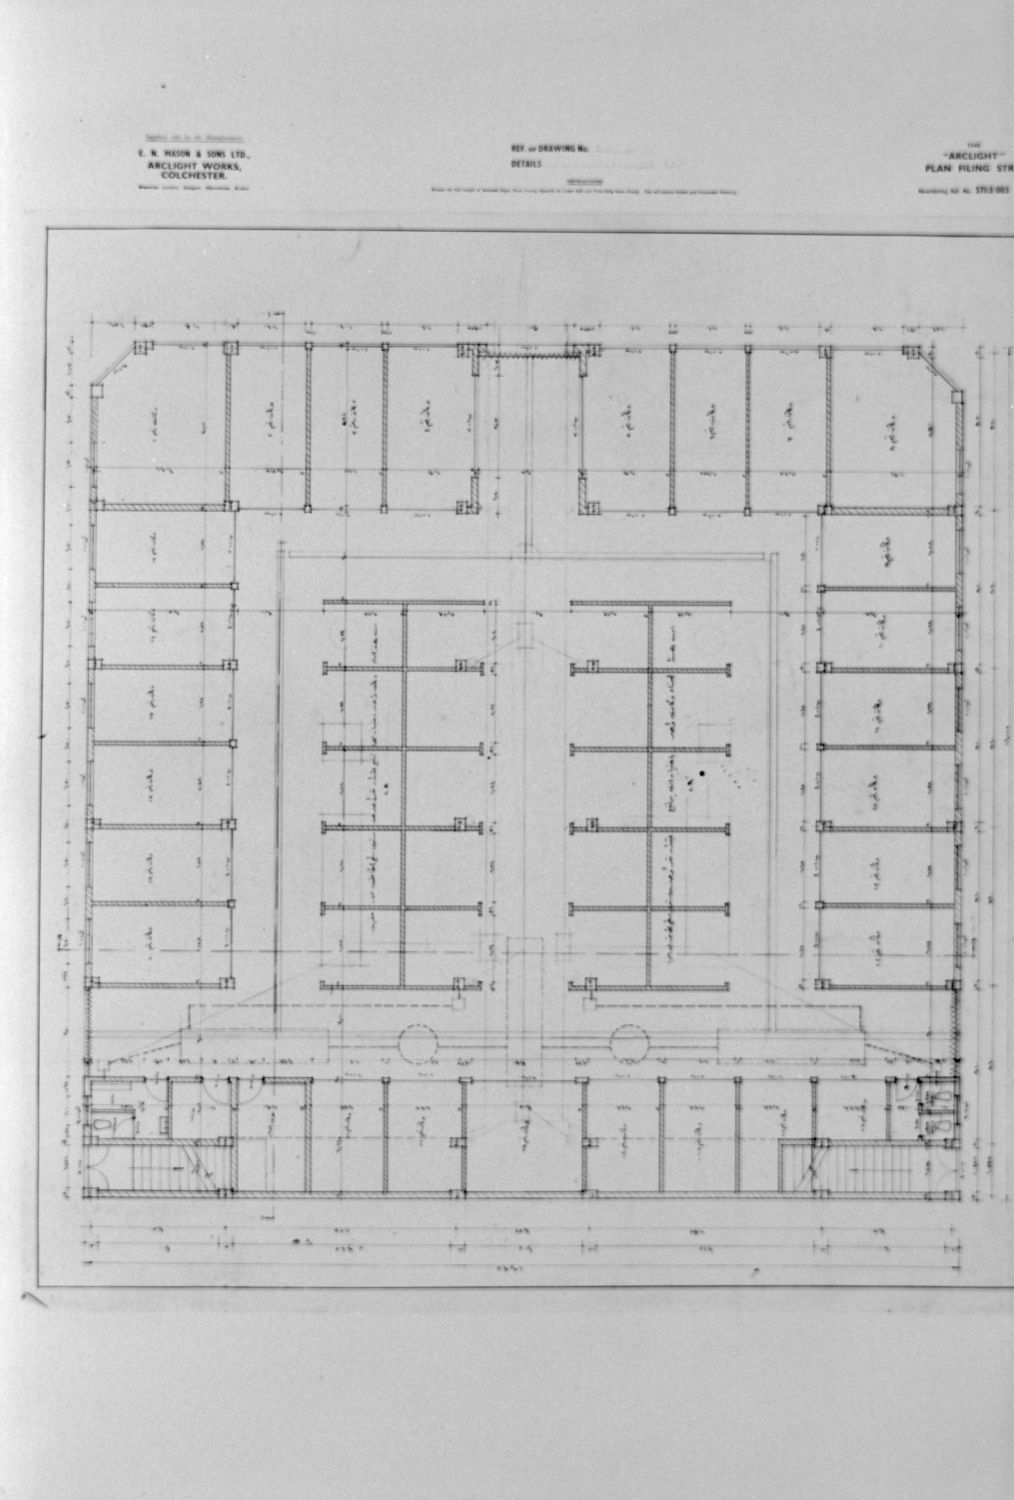 Corbachi Building - Ground floor plan.